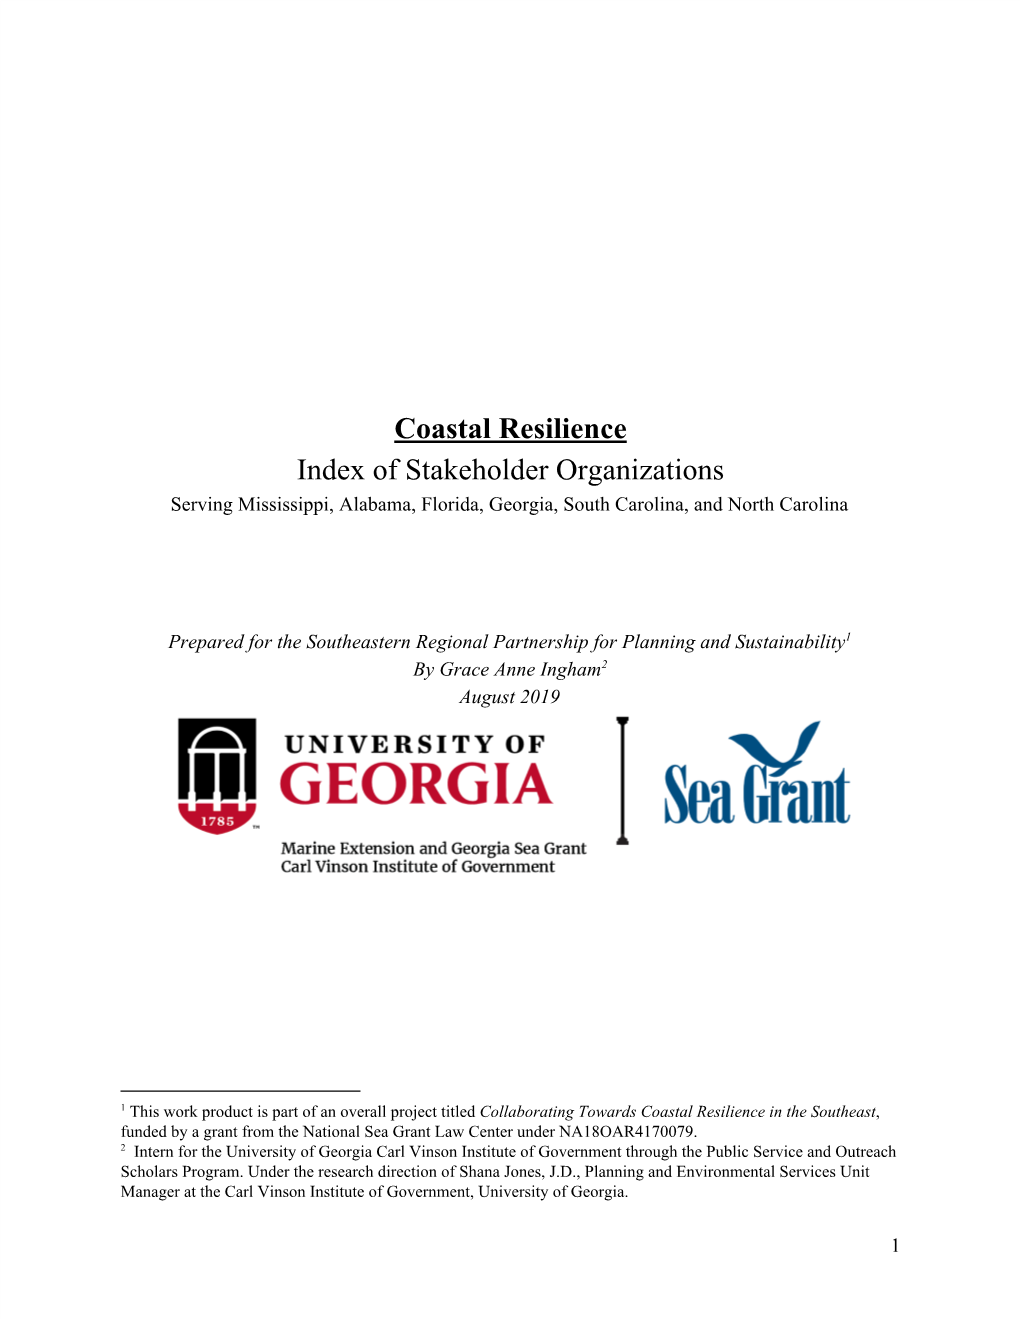 Coastal Resilience Index of Stakeholder Organizations Serving Mississippi, Alabama, Florida, Georgia, South Carolina, and North Carolina